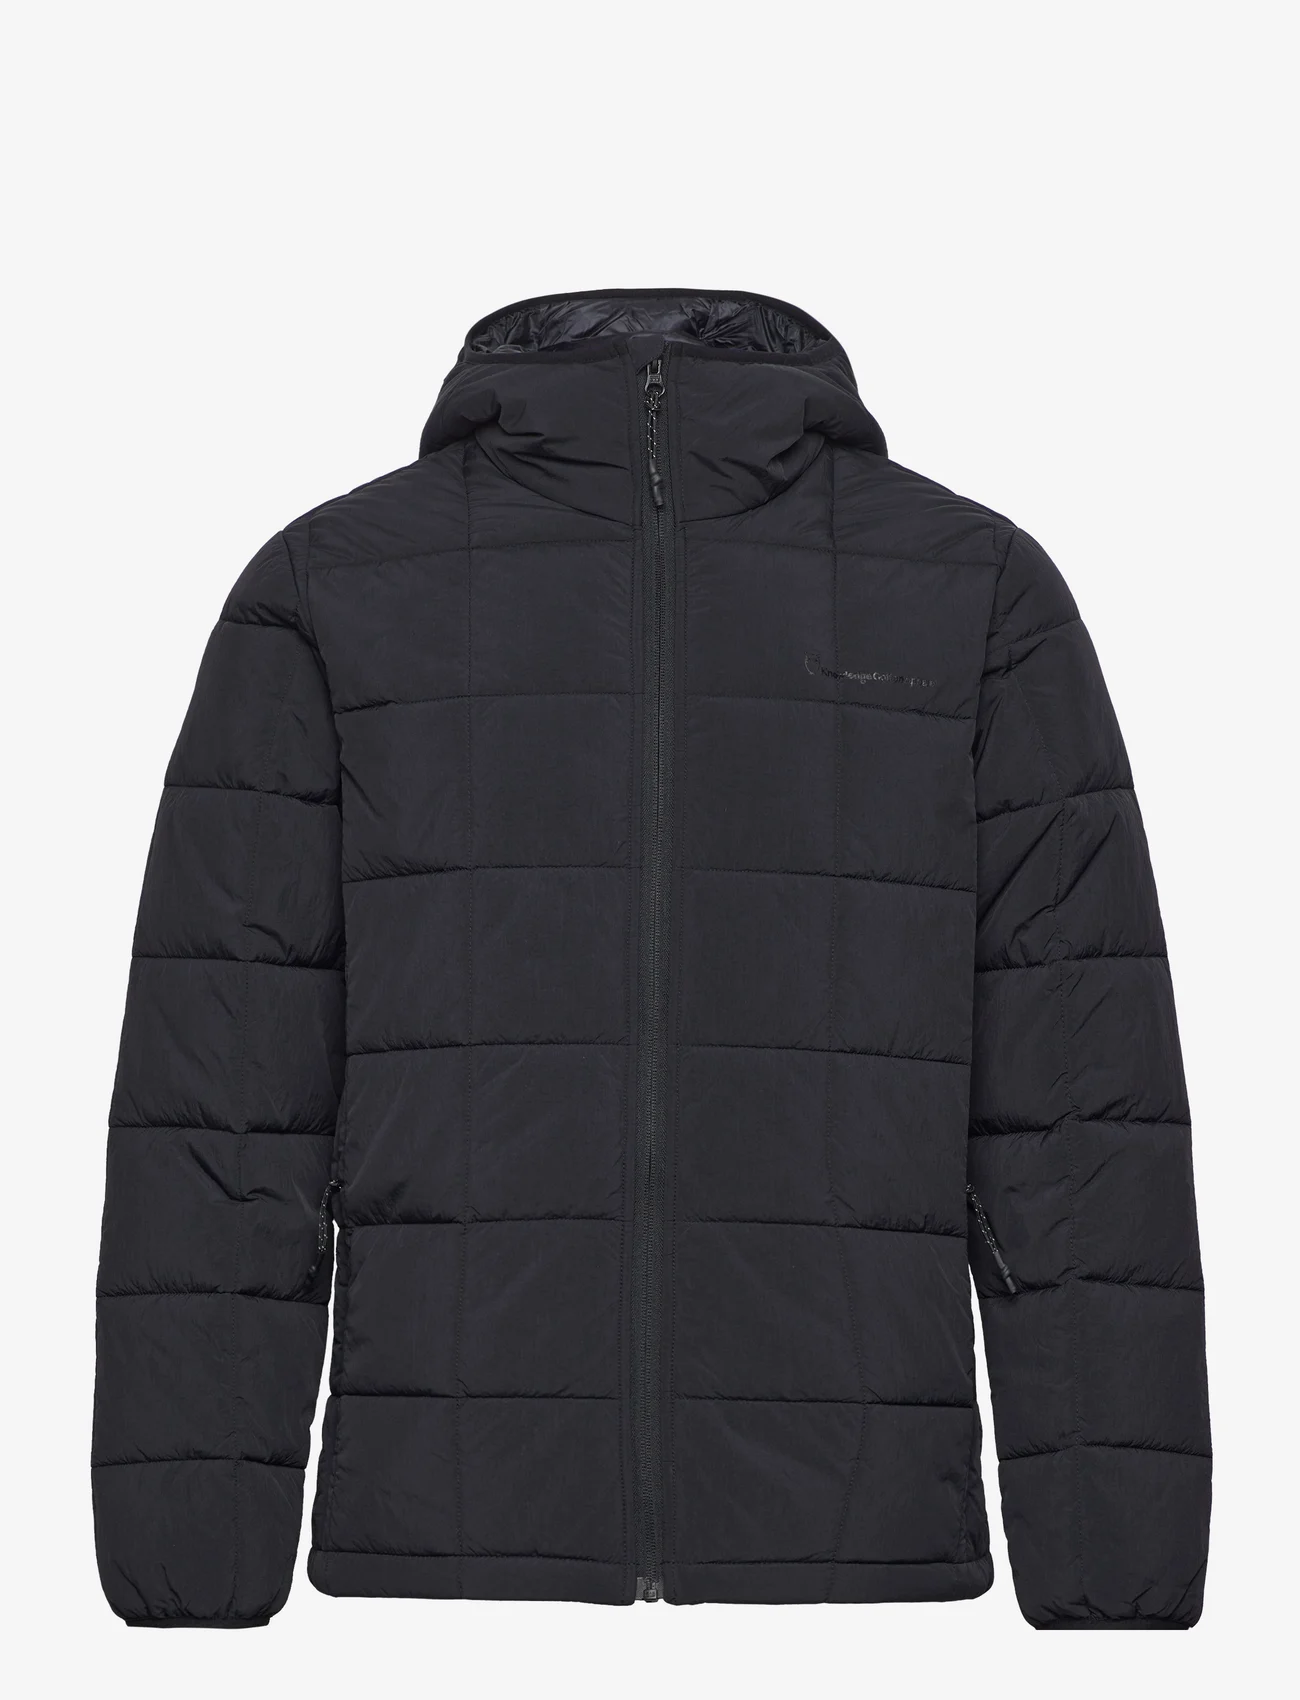 Knowledge Cotton Apparel - GO ANYWEAR quilted padded jacket - - padded jackets - black jet - 0